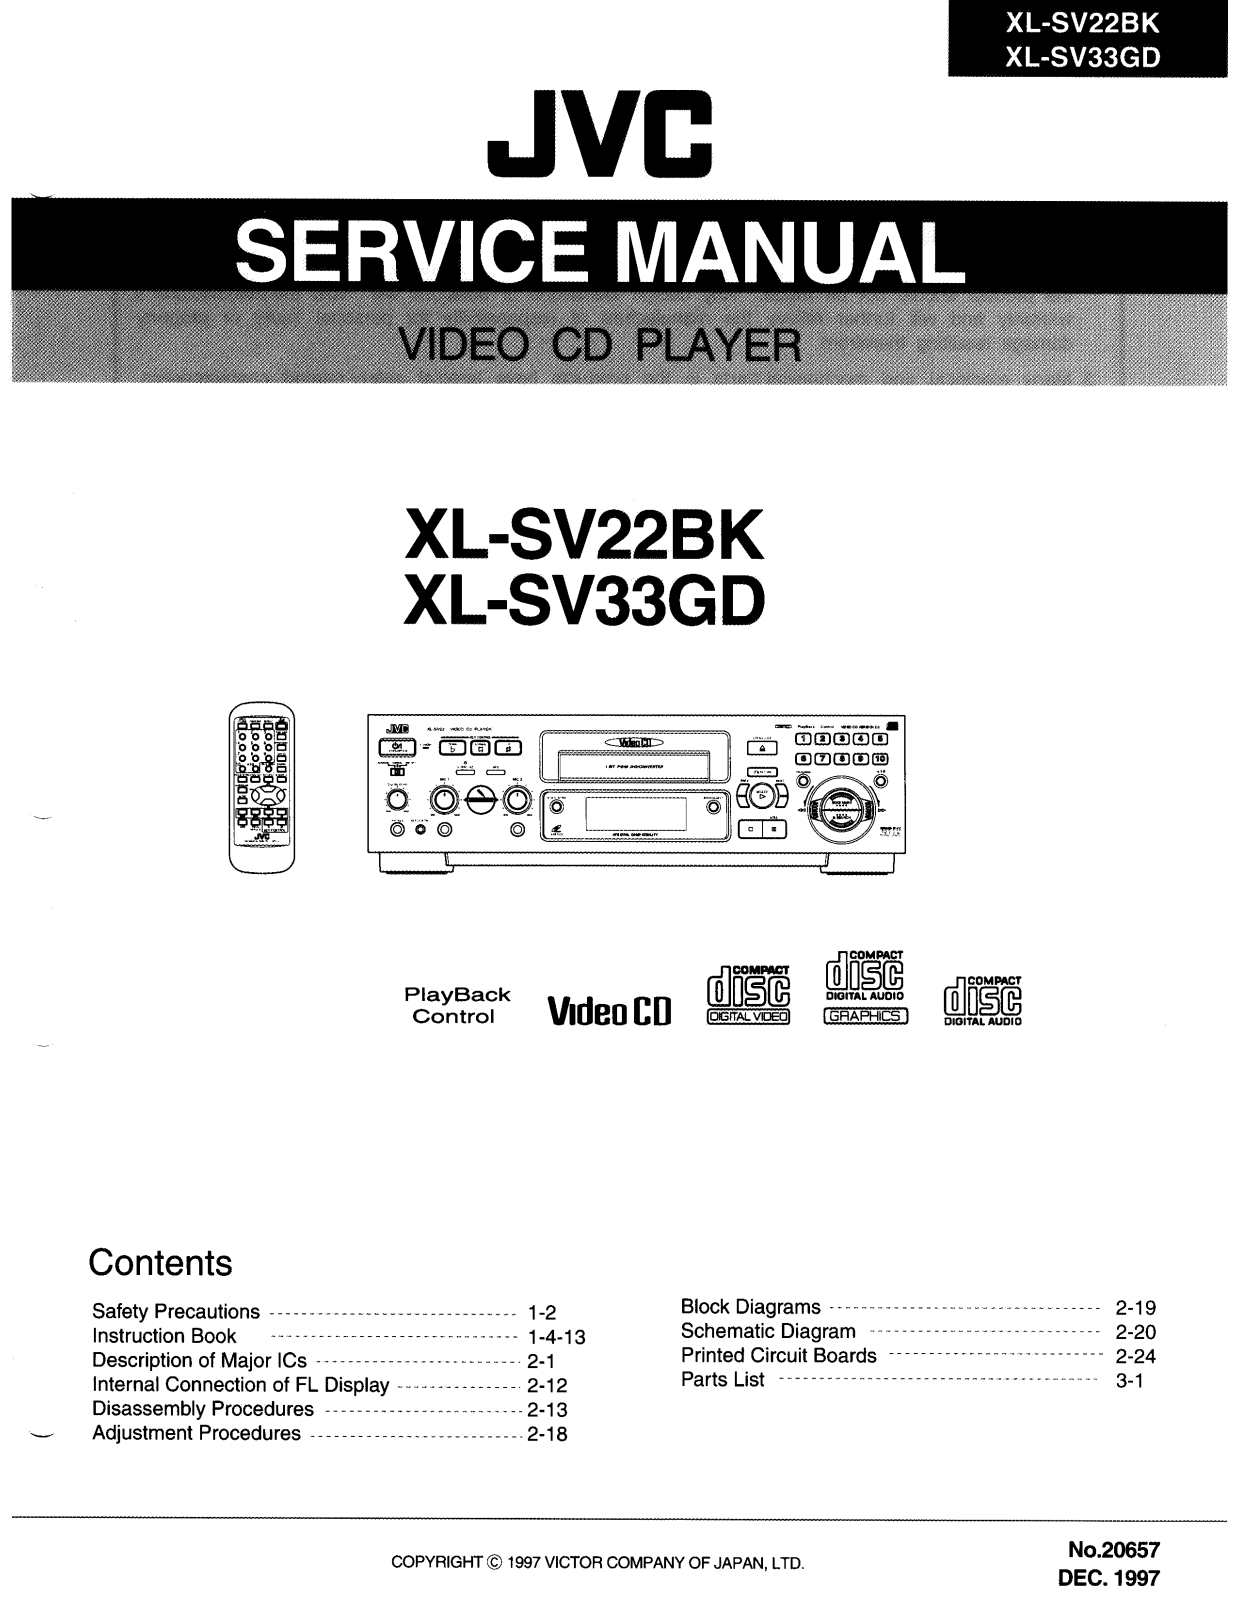 JVC XL-SV22BKU, XL-SV22BKUB, XL-SV22BKUF, XL-SV22BKUT, XL-SV23GDU Service Manual